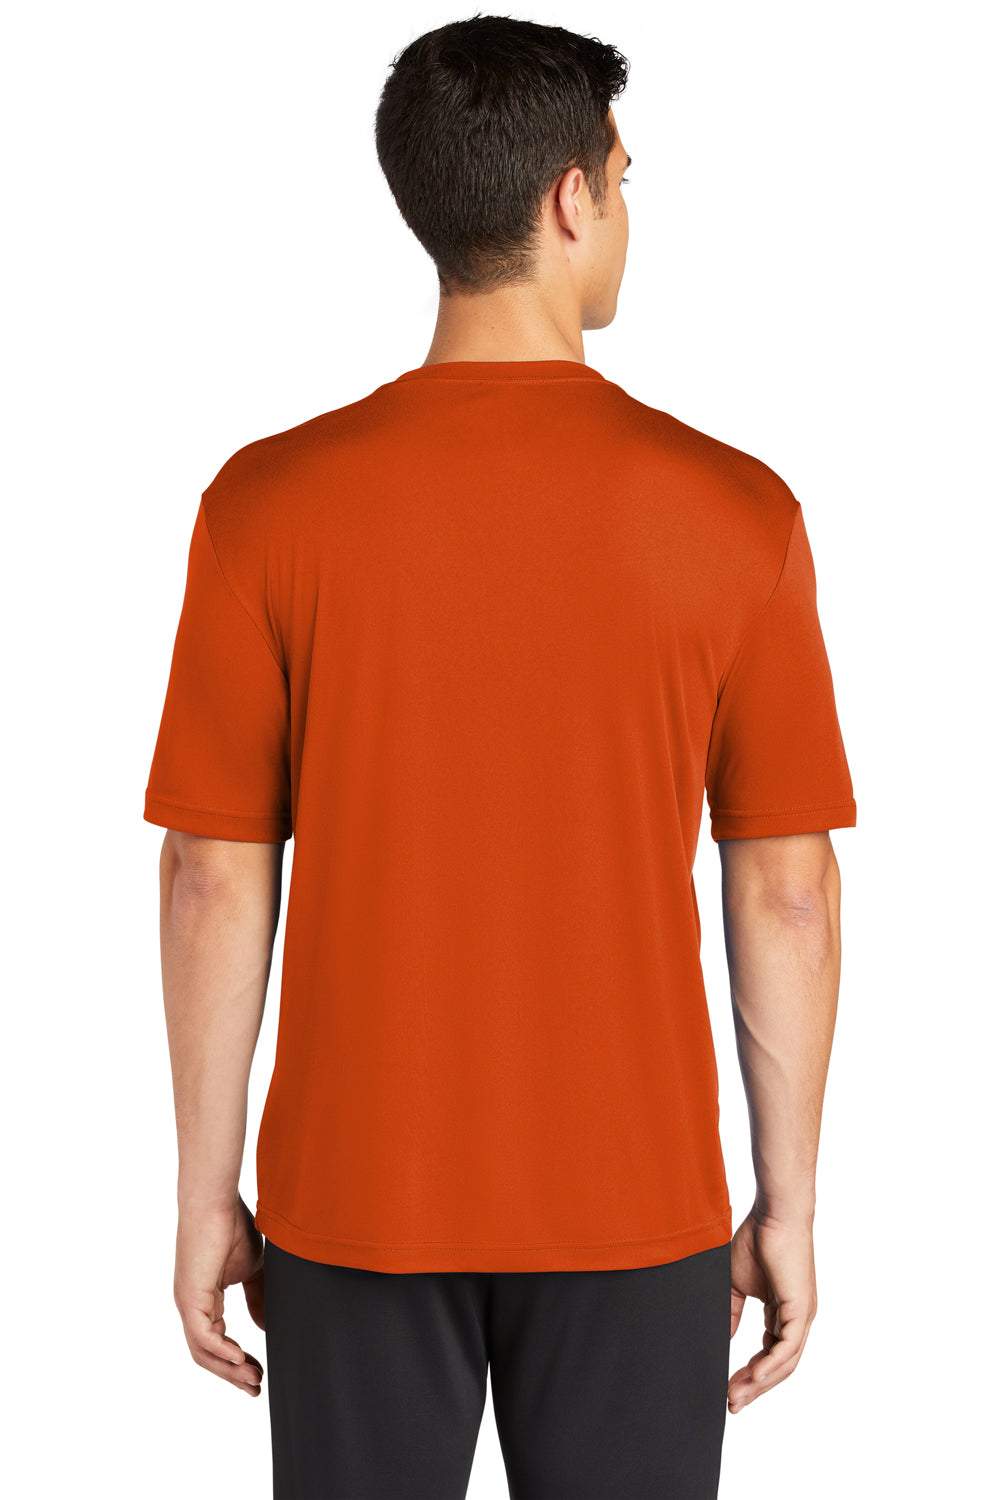 Sport-Tek ST350 Mens Competitor Moisture Wicking Short Sleeve Crewneck T-Shirt Orange Back